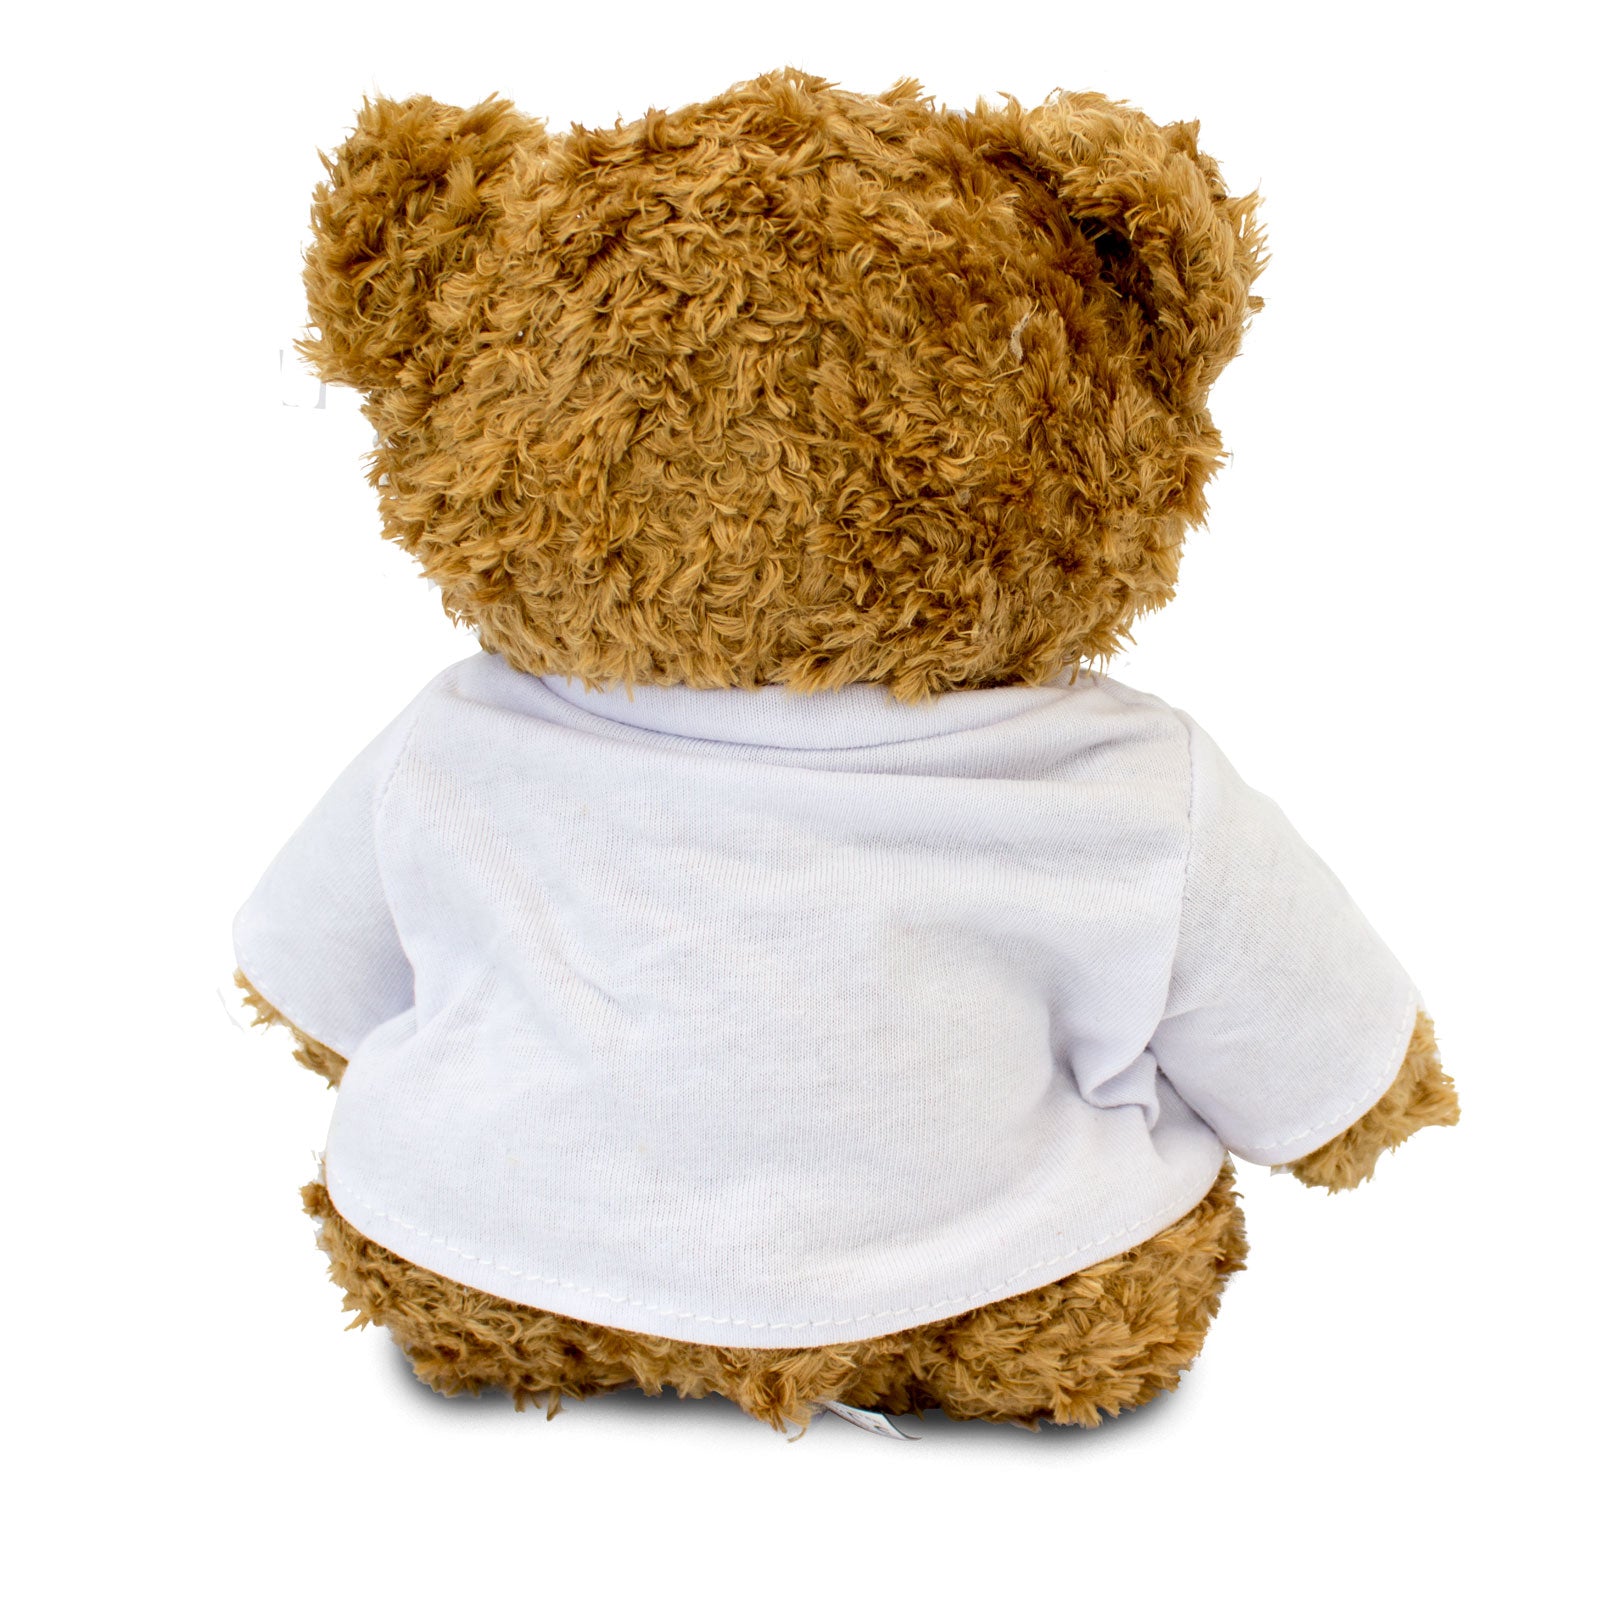 I Love Jude - Teddy Bear